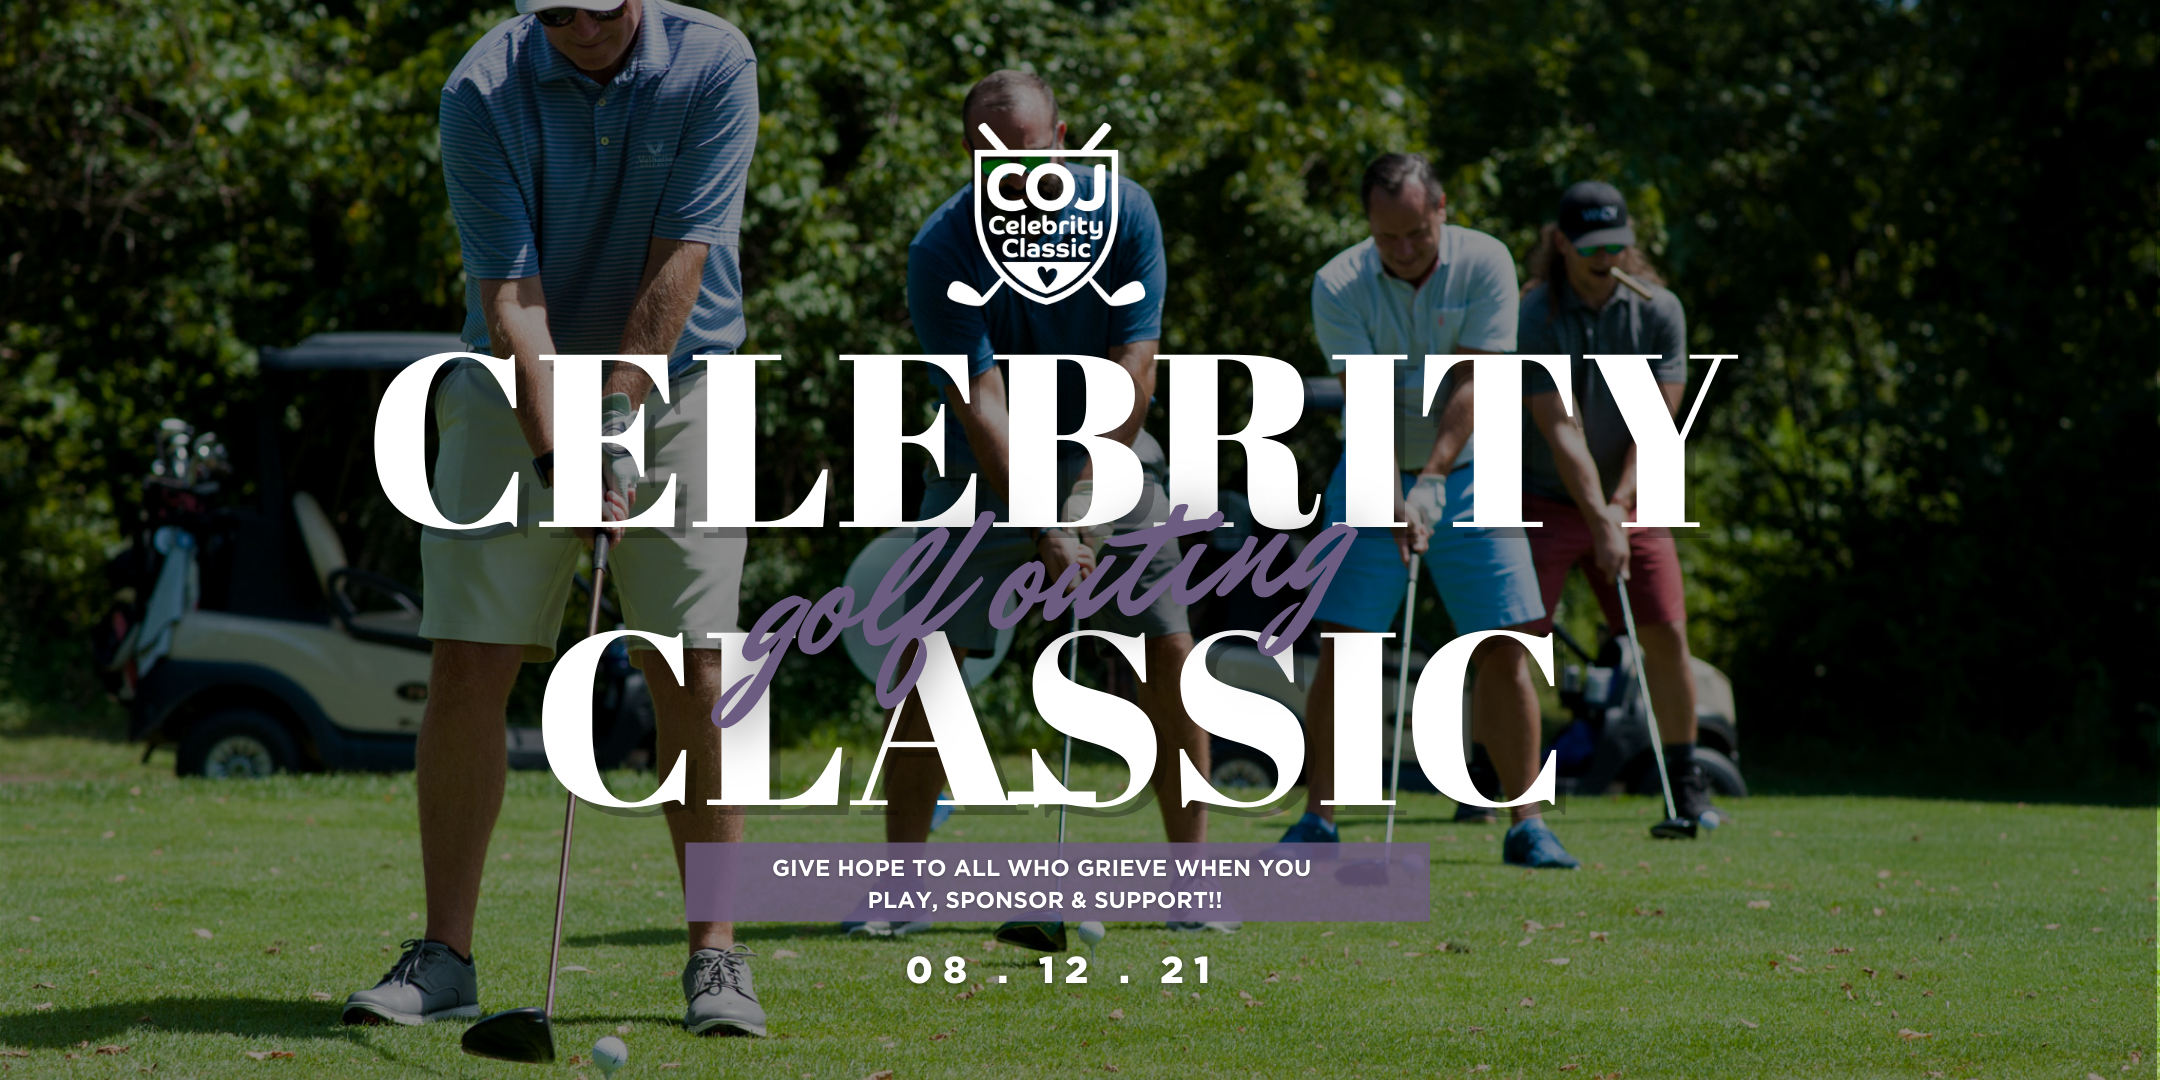 COJ 7th Annual Celebrity Classic Golf Outing